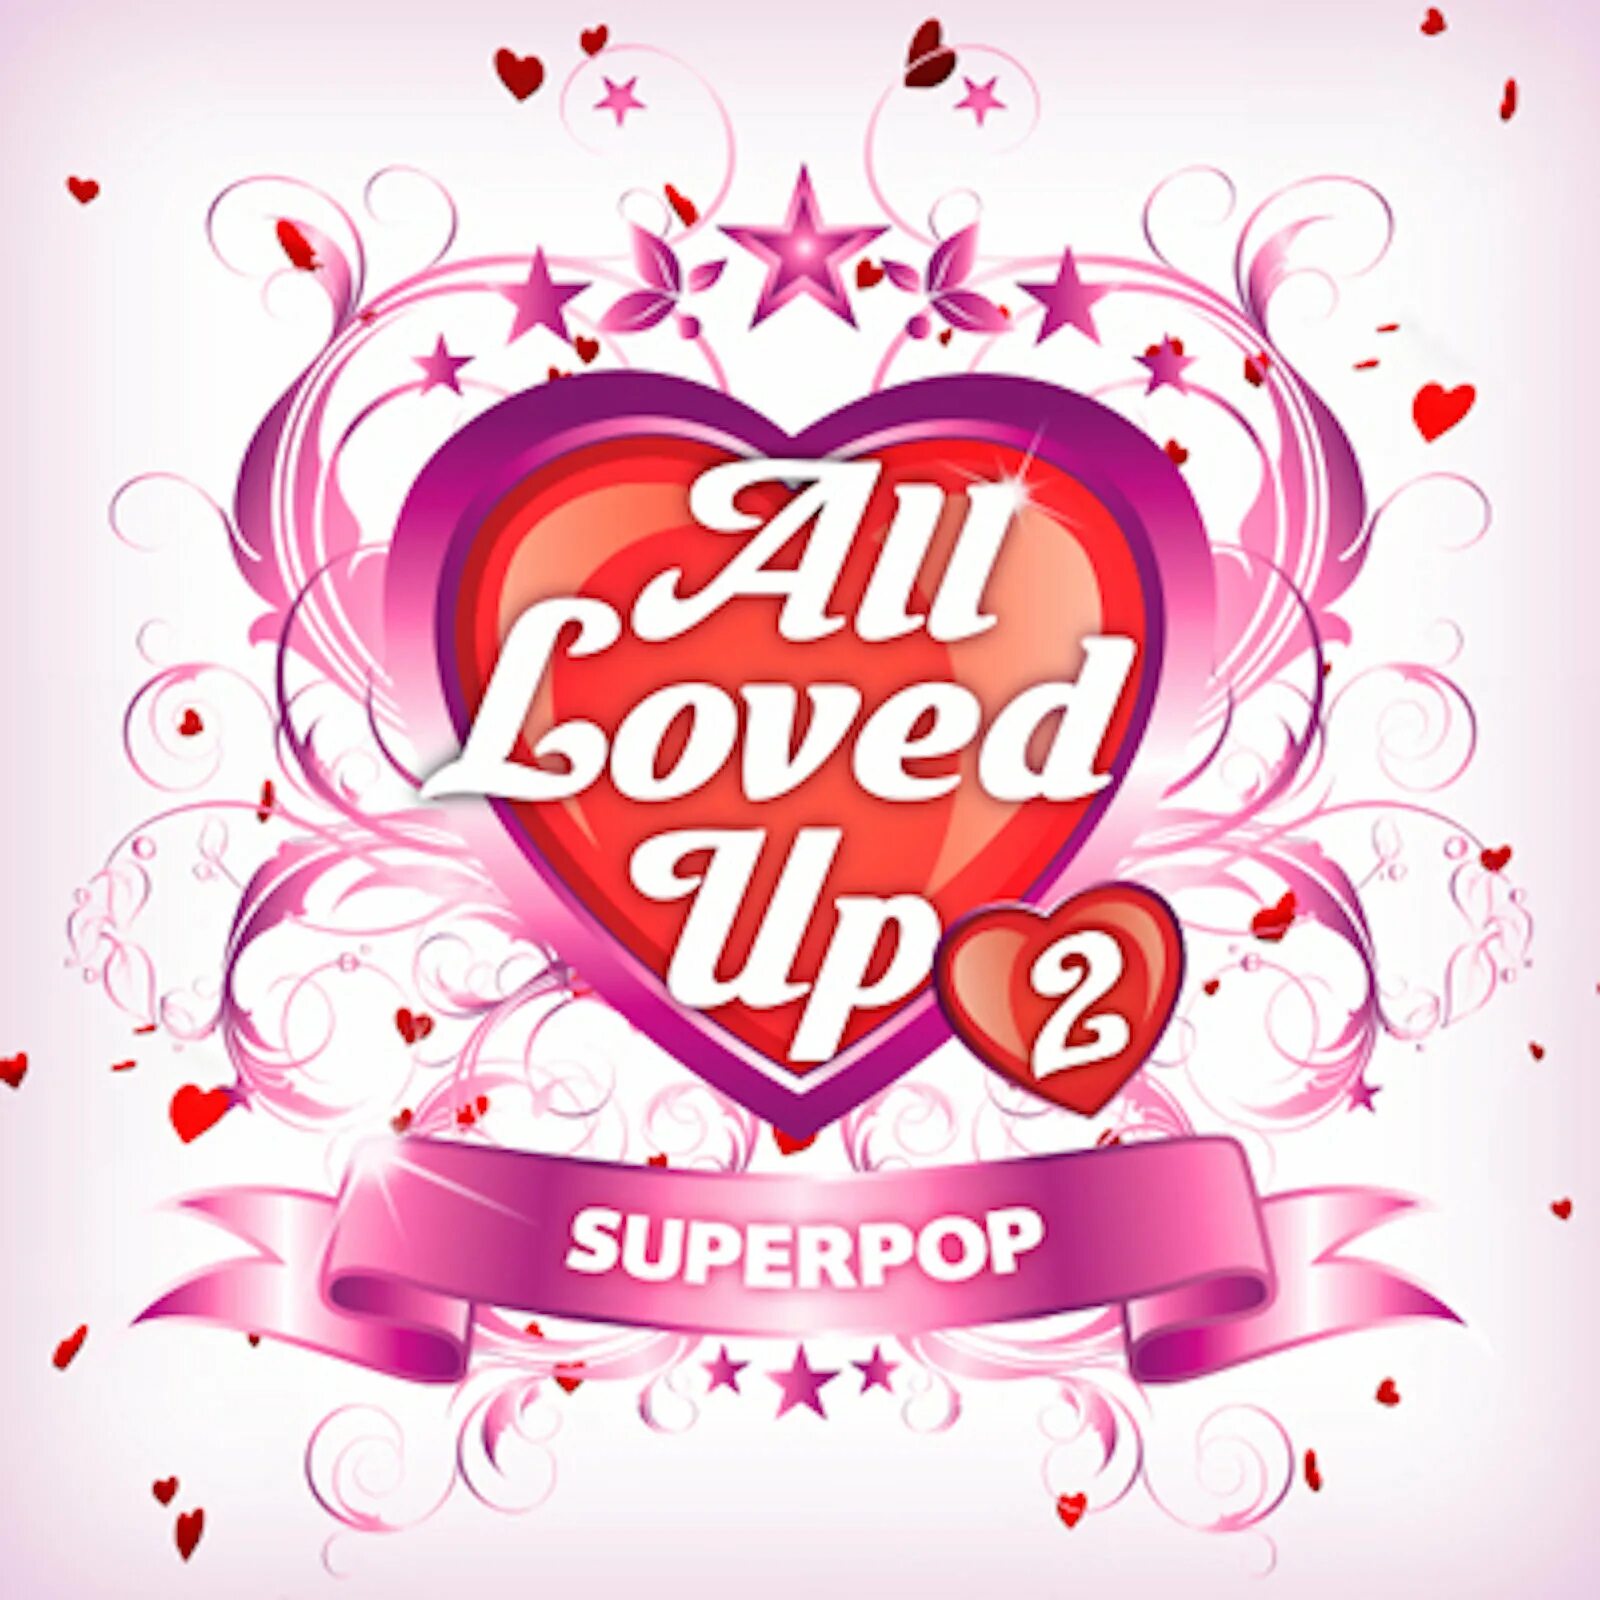 Up 2 something. Superpop 2. Лове ап. Up 2 me. Superpop (2009).